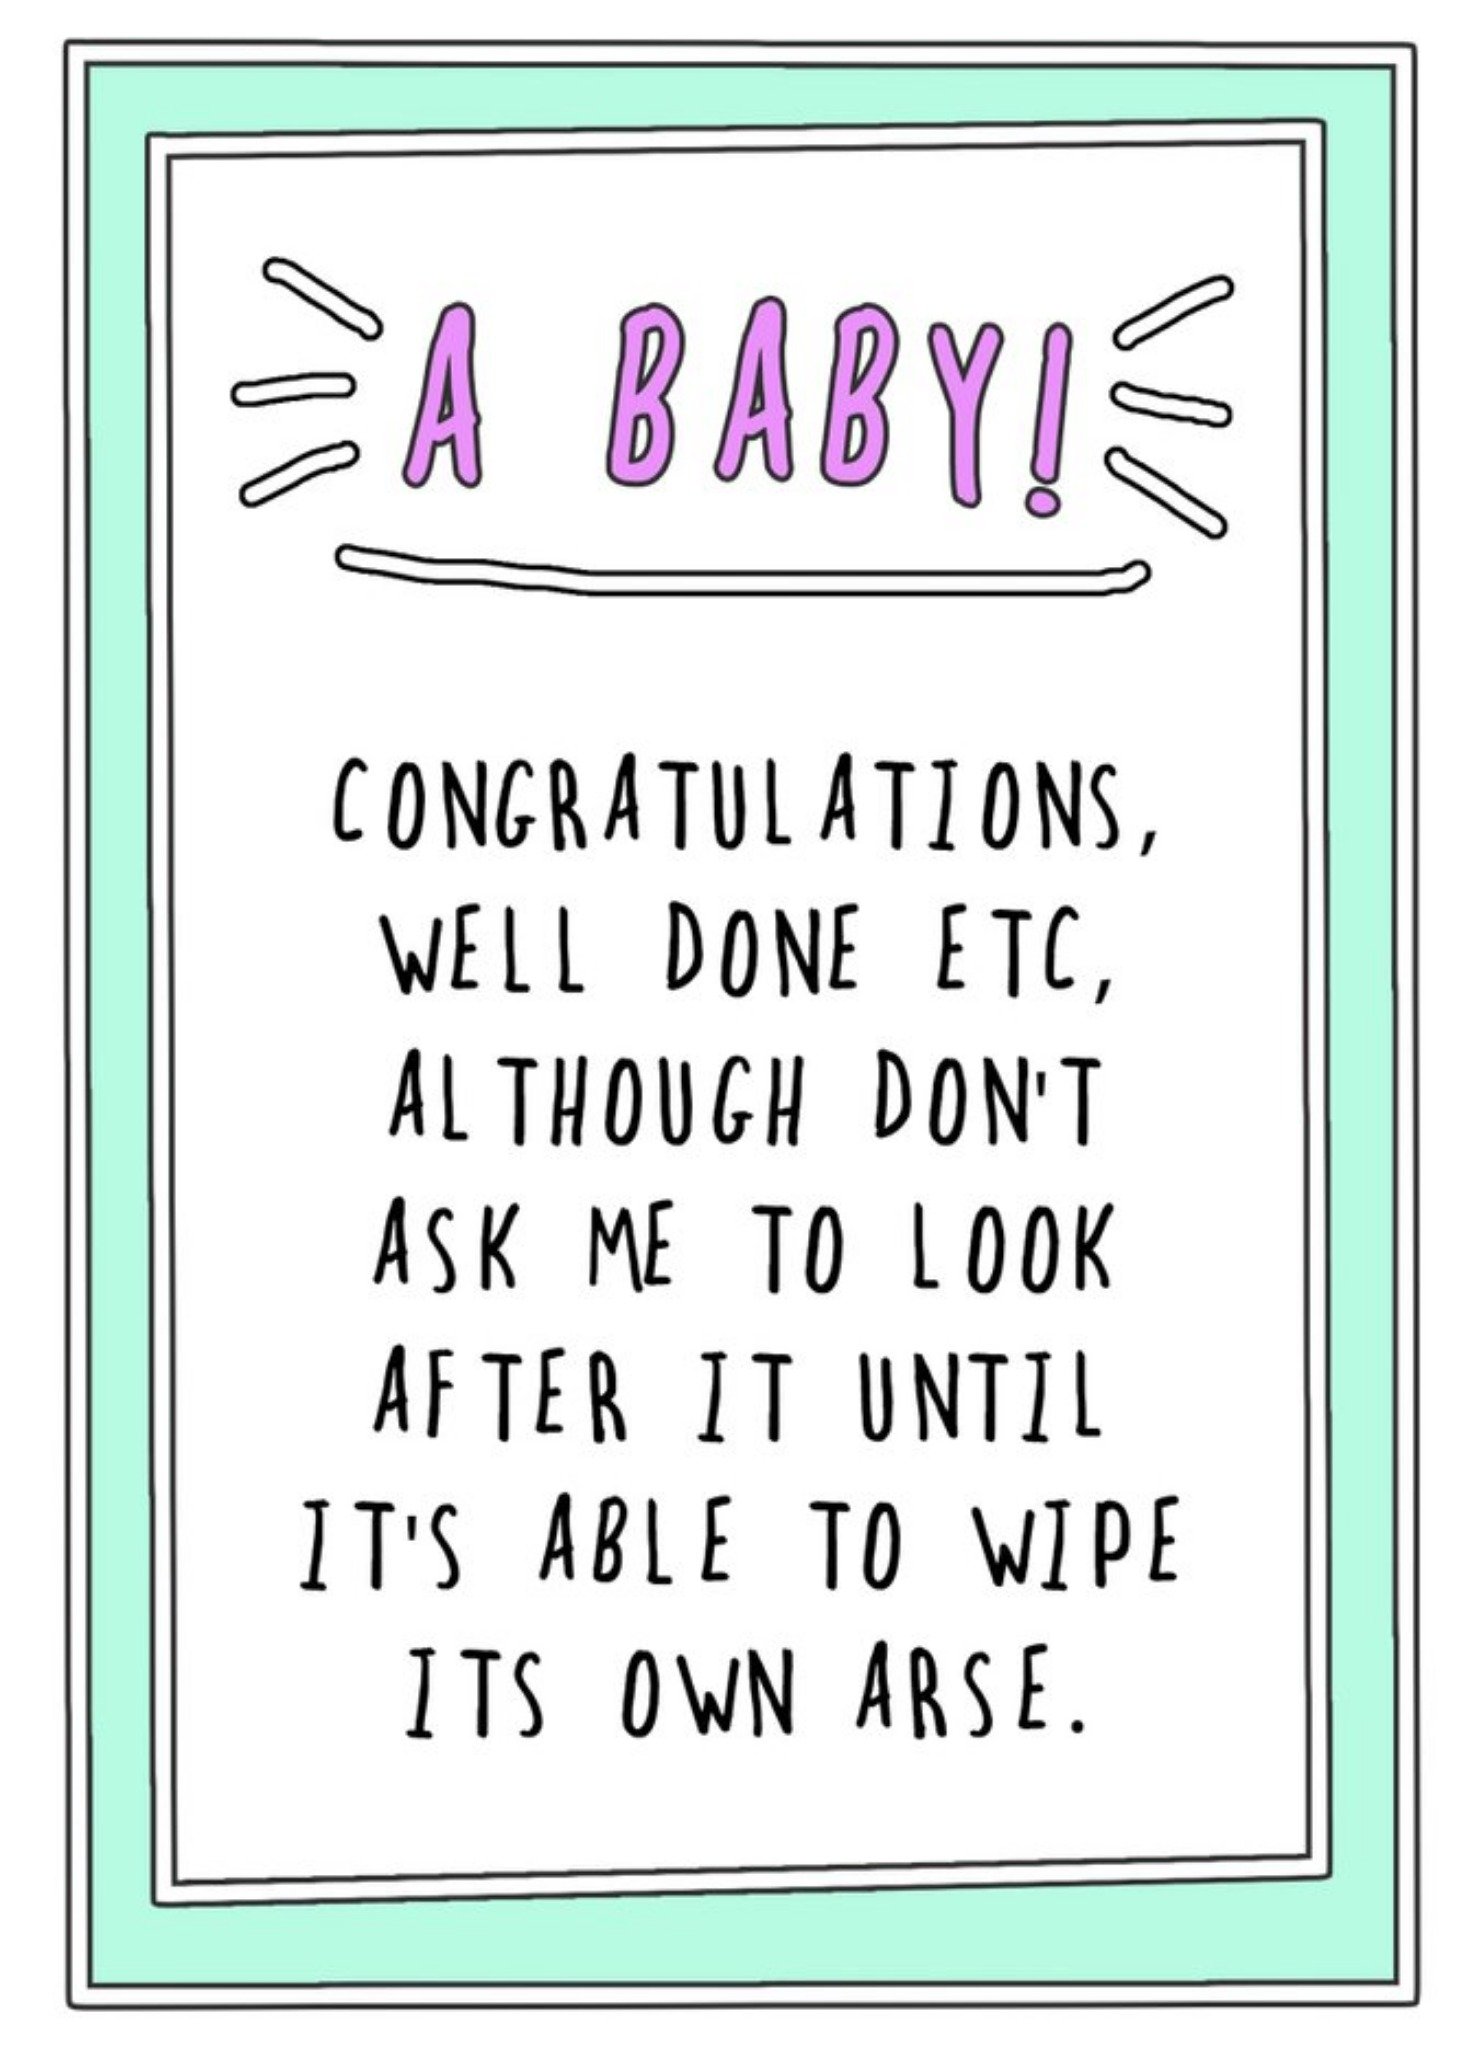 Go La La Funny Congratulations, Well Done Etc Wipe Its Own Arse New Baby Card Ecard